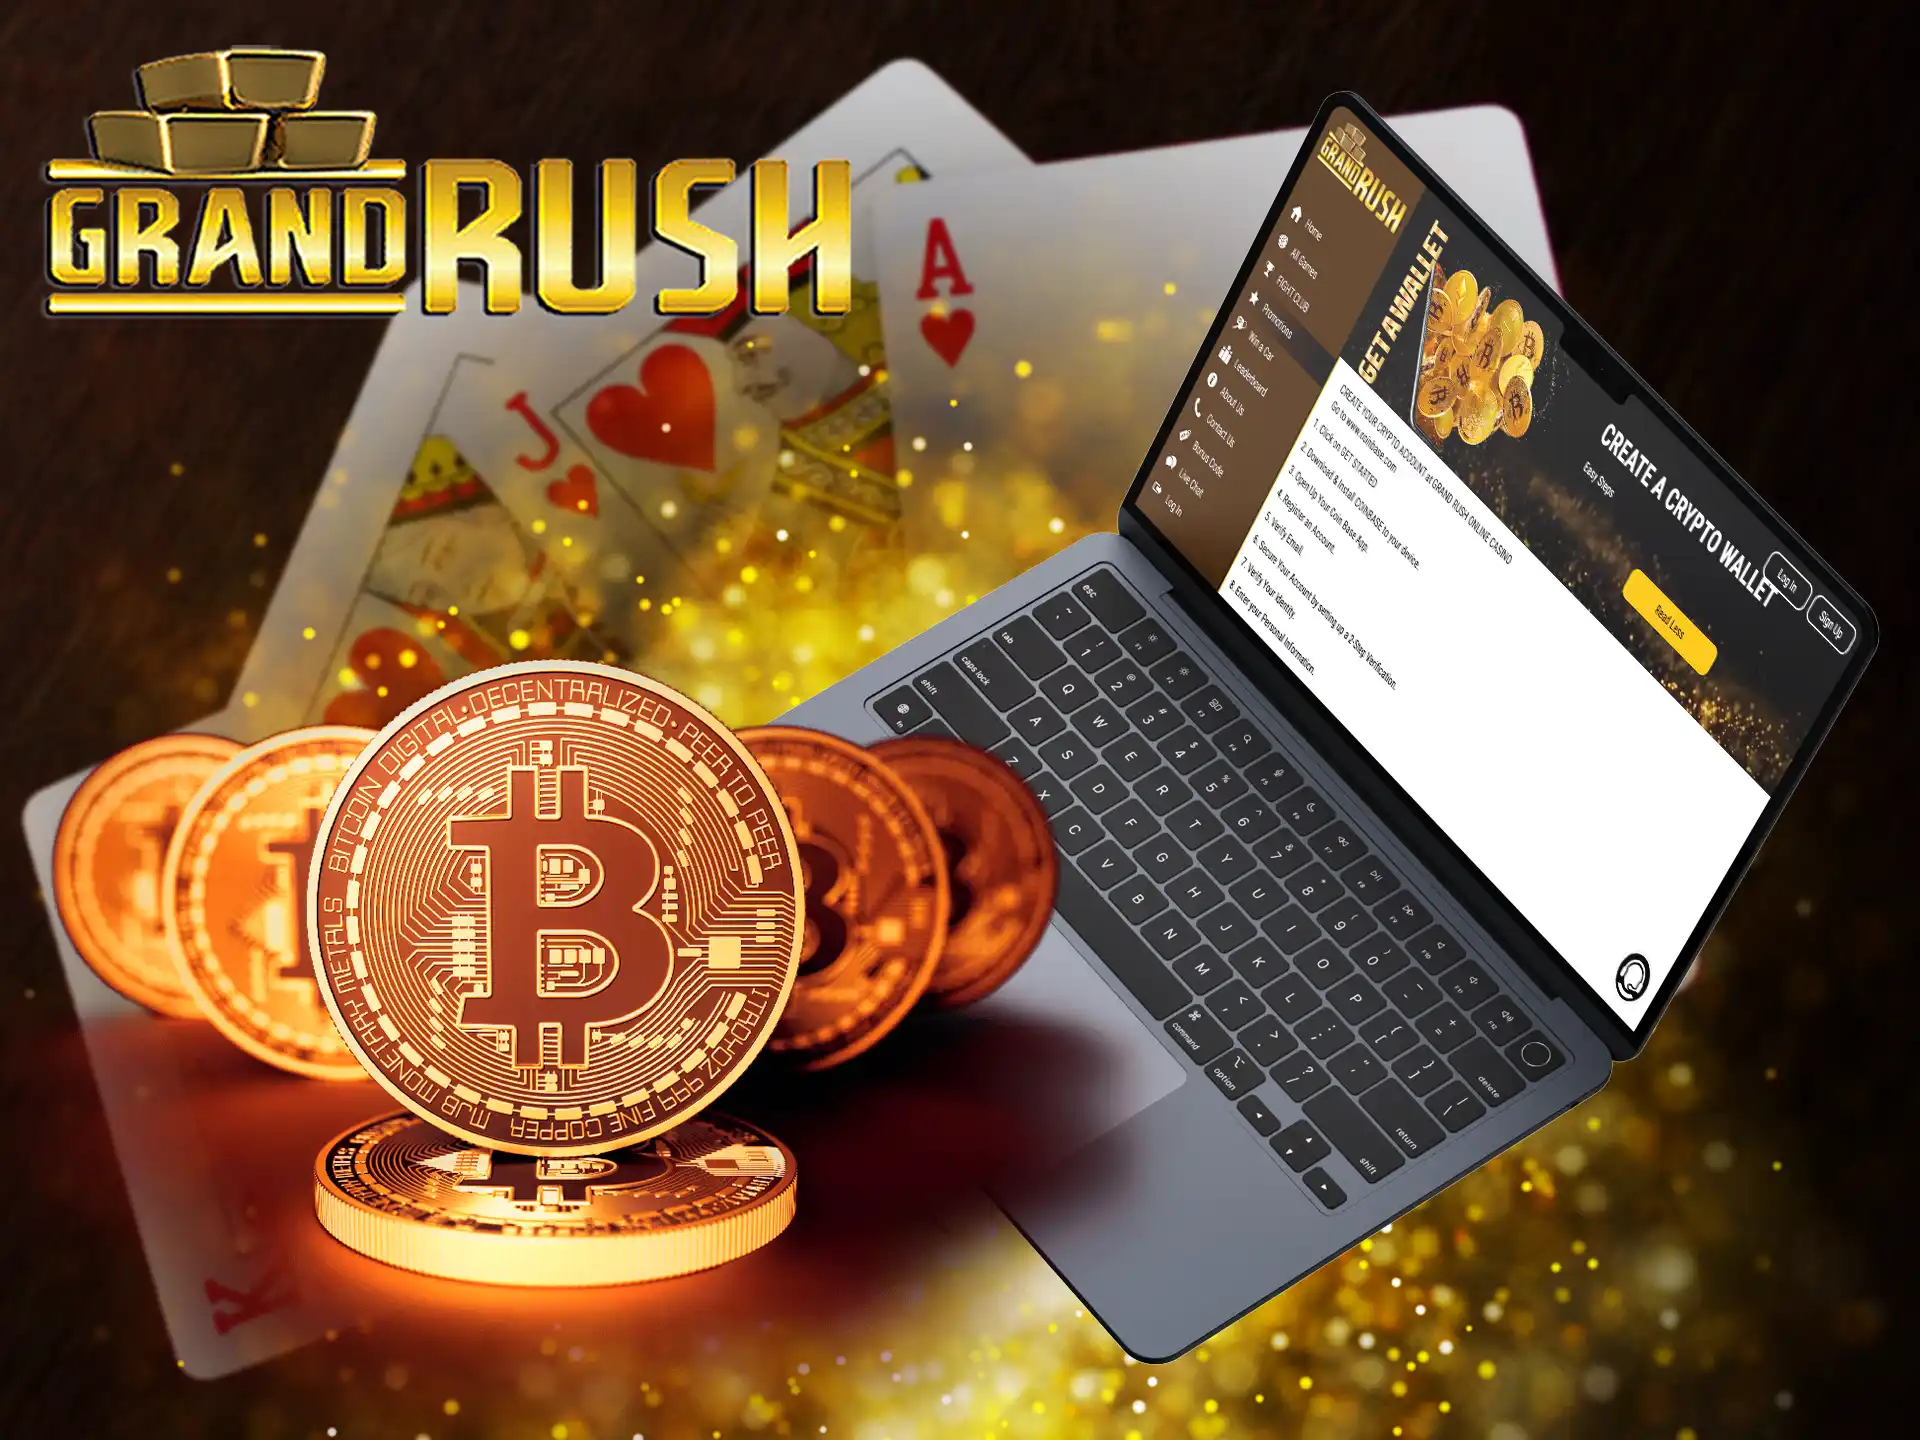 Get 100% Grand Rush deposit bonus for crypto deposits.